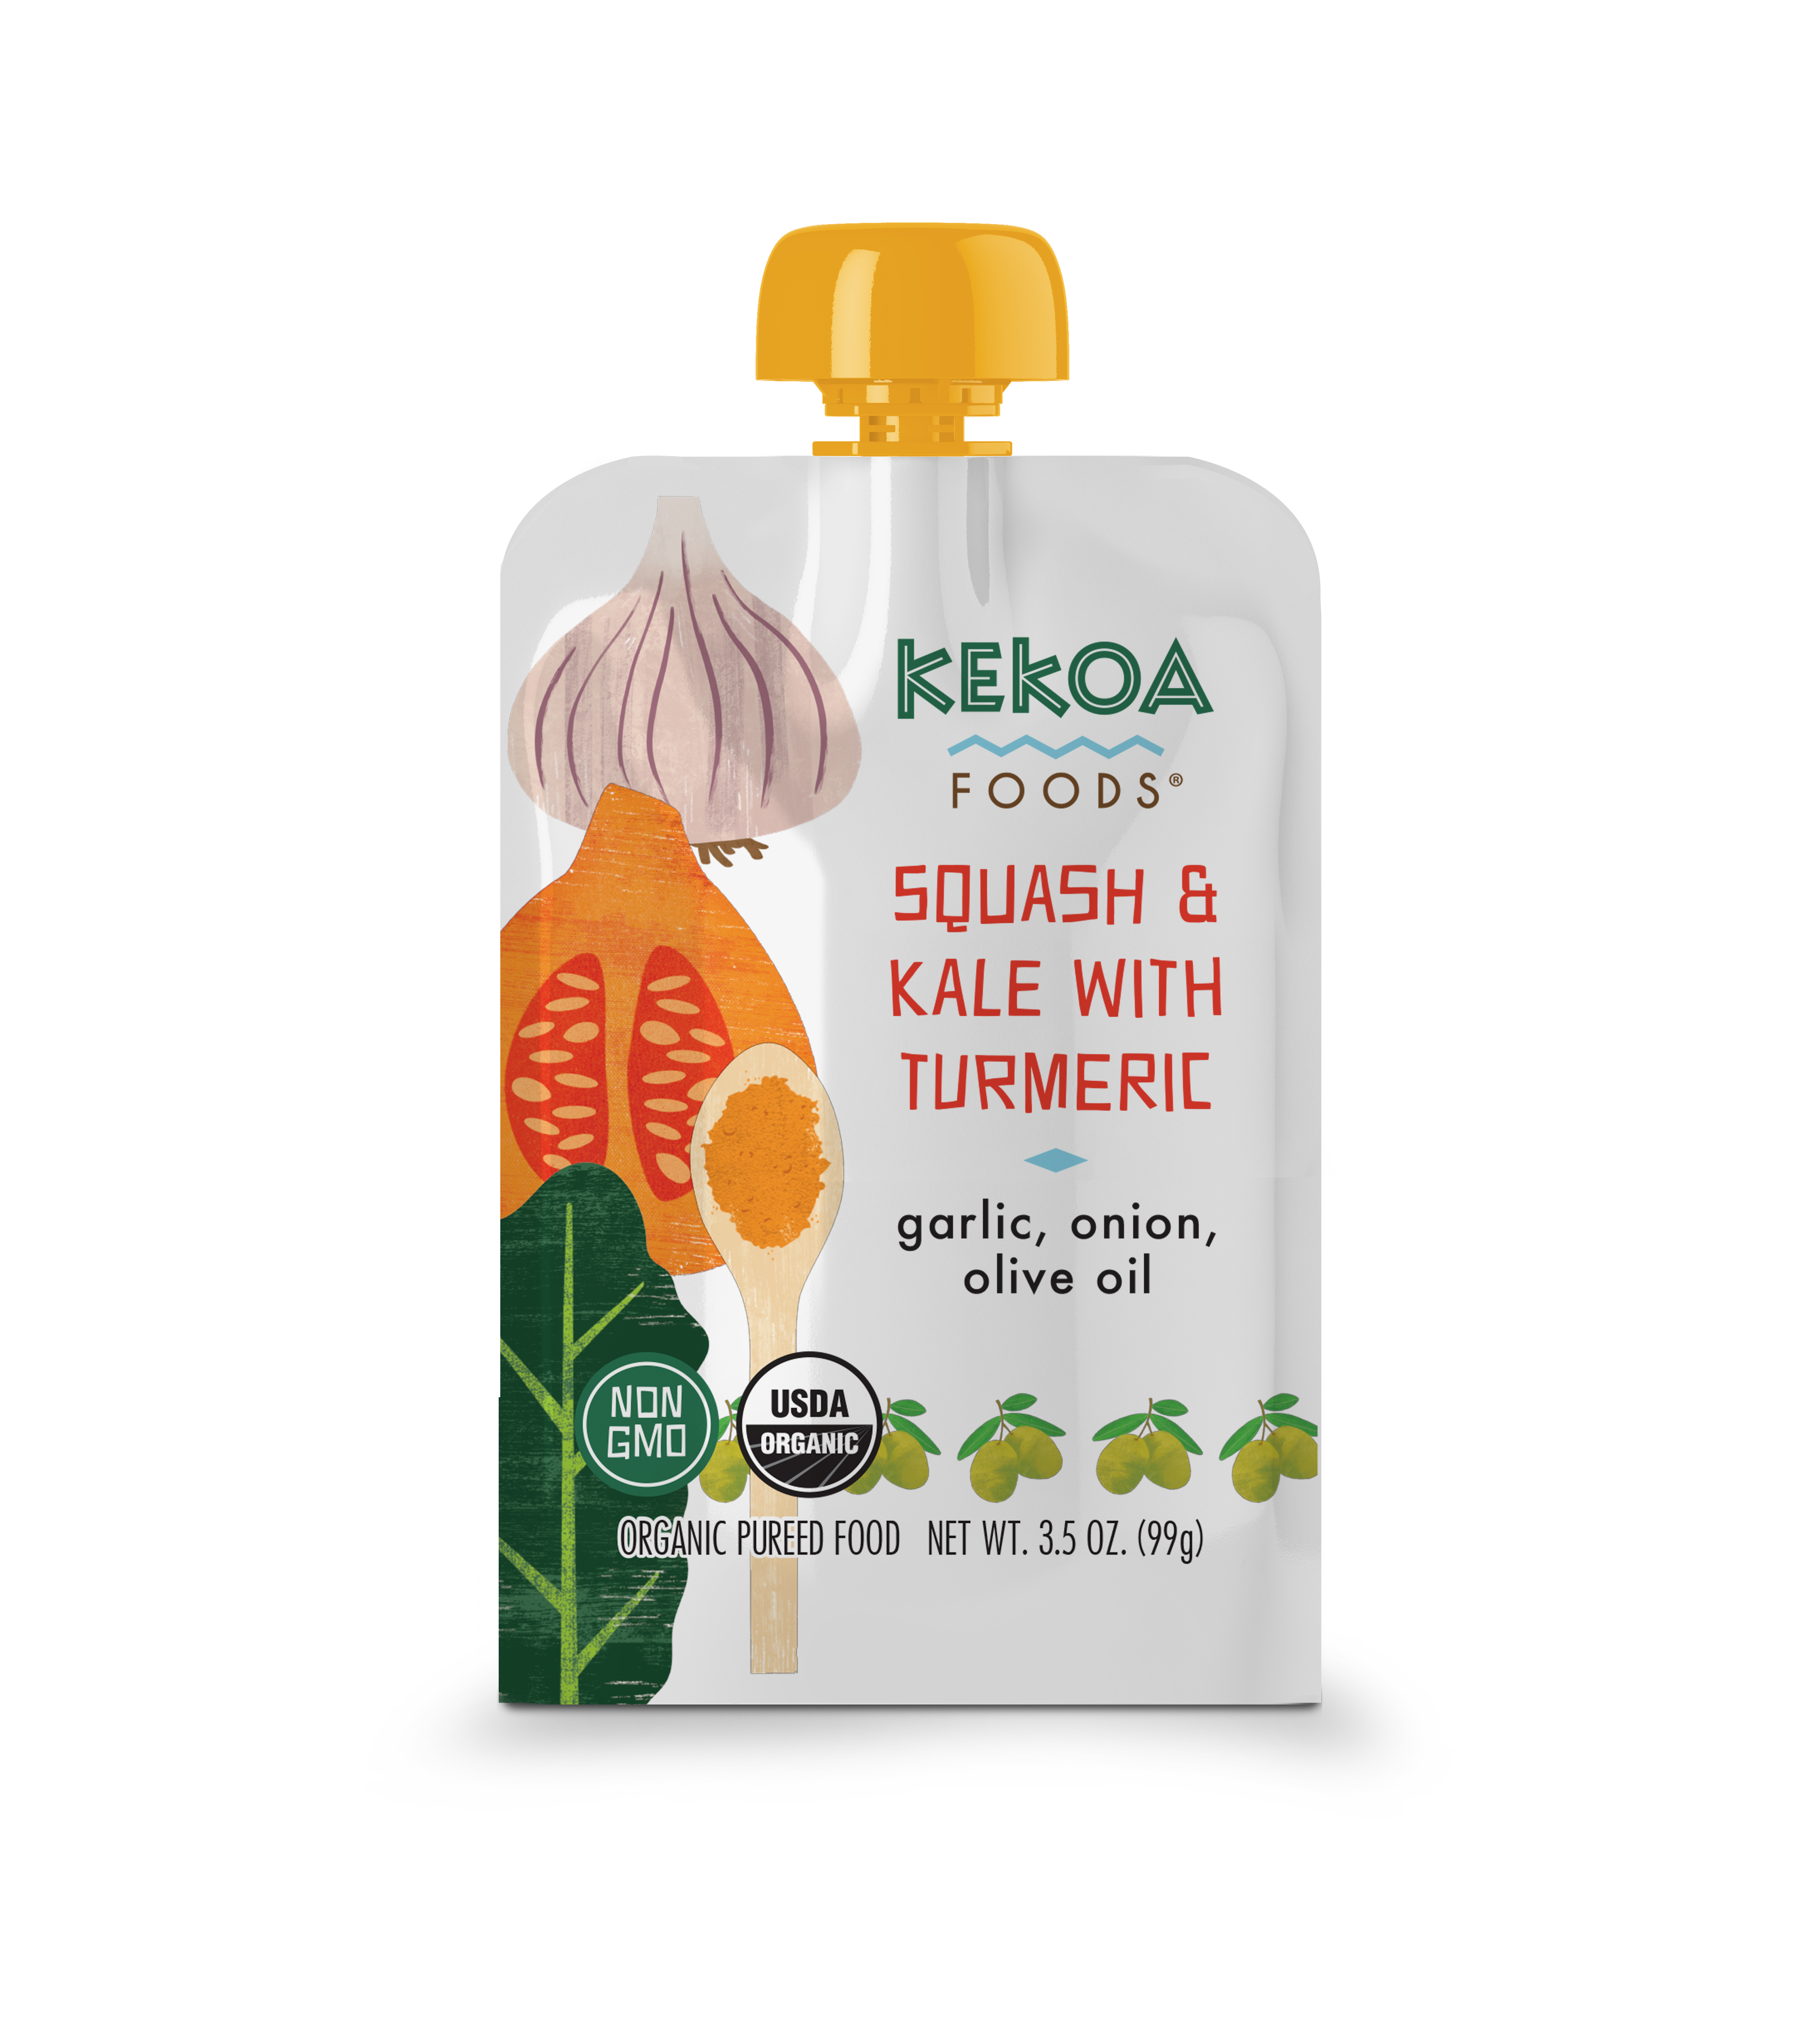 Kekoa Foods - Squash and Kale with Turmeric 6 innerpacks per case 3.5 oz